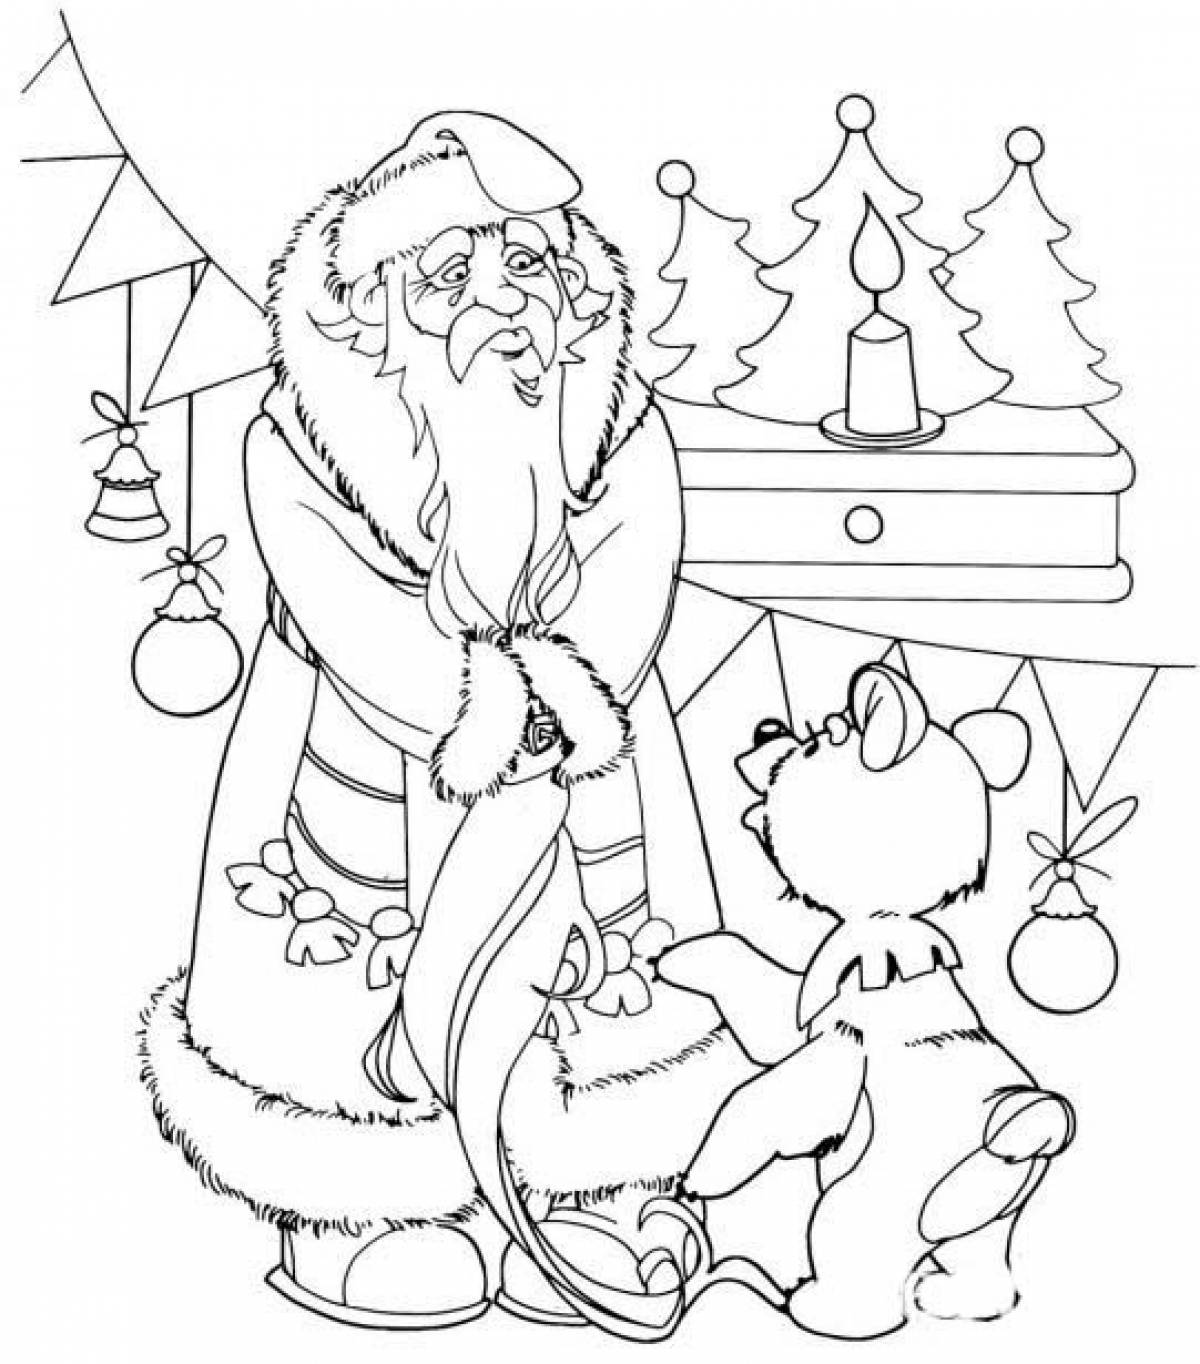 Animals and Santa Claus